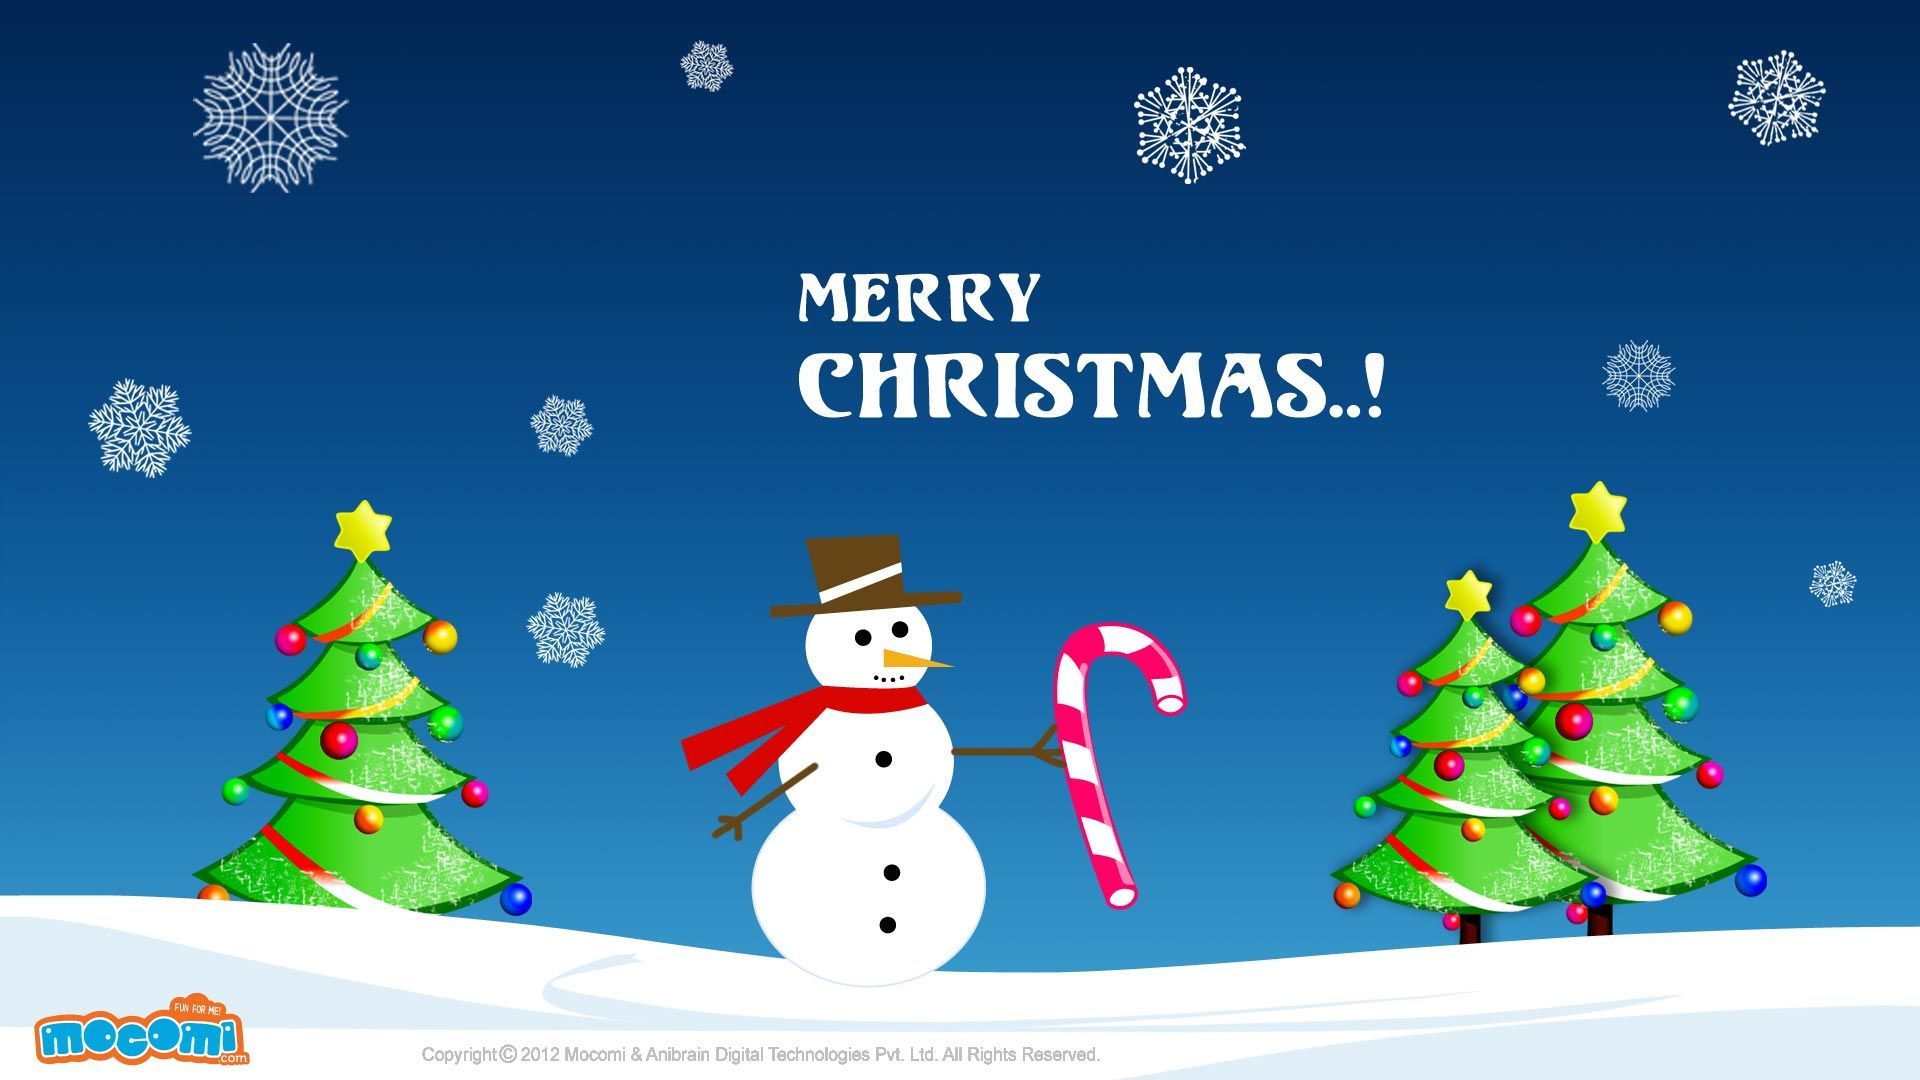 Merry Christmas Snowman Wallpaper for Kids. Mocomi. Merry christmas funny, Merry christmas wishes, Merry christmas wallpaper